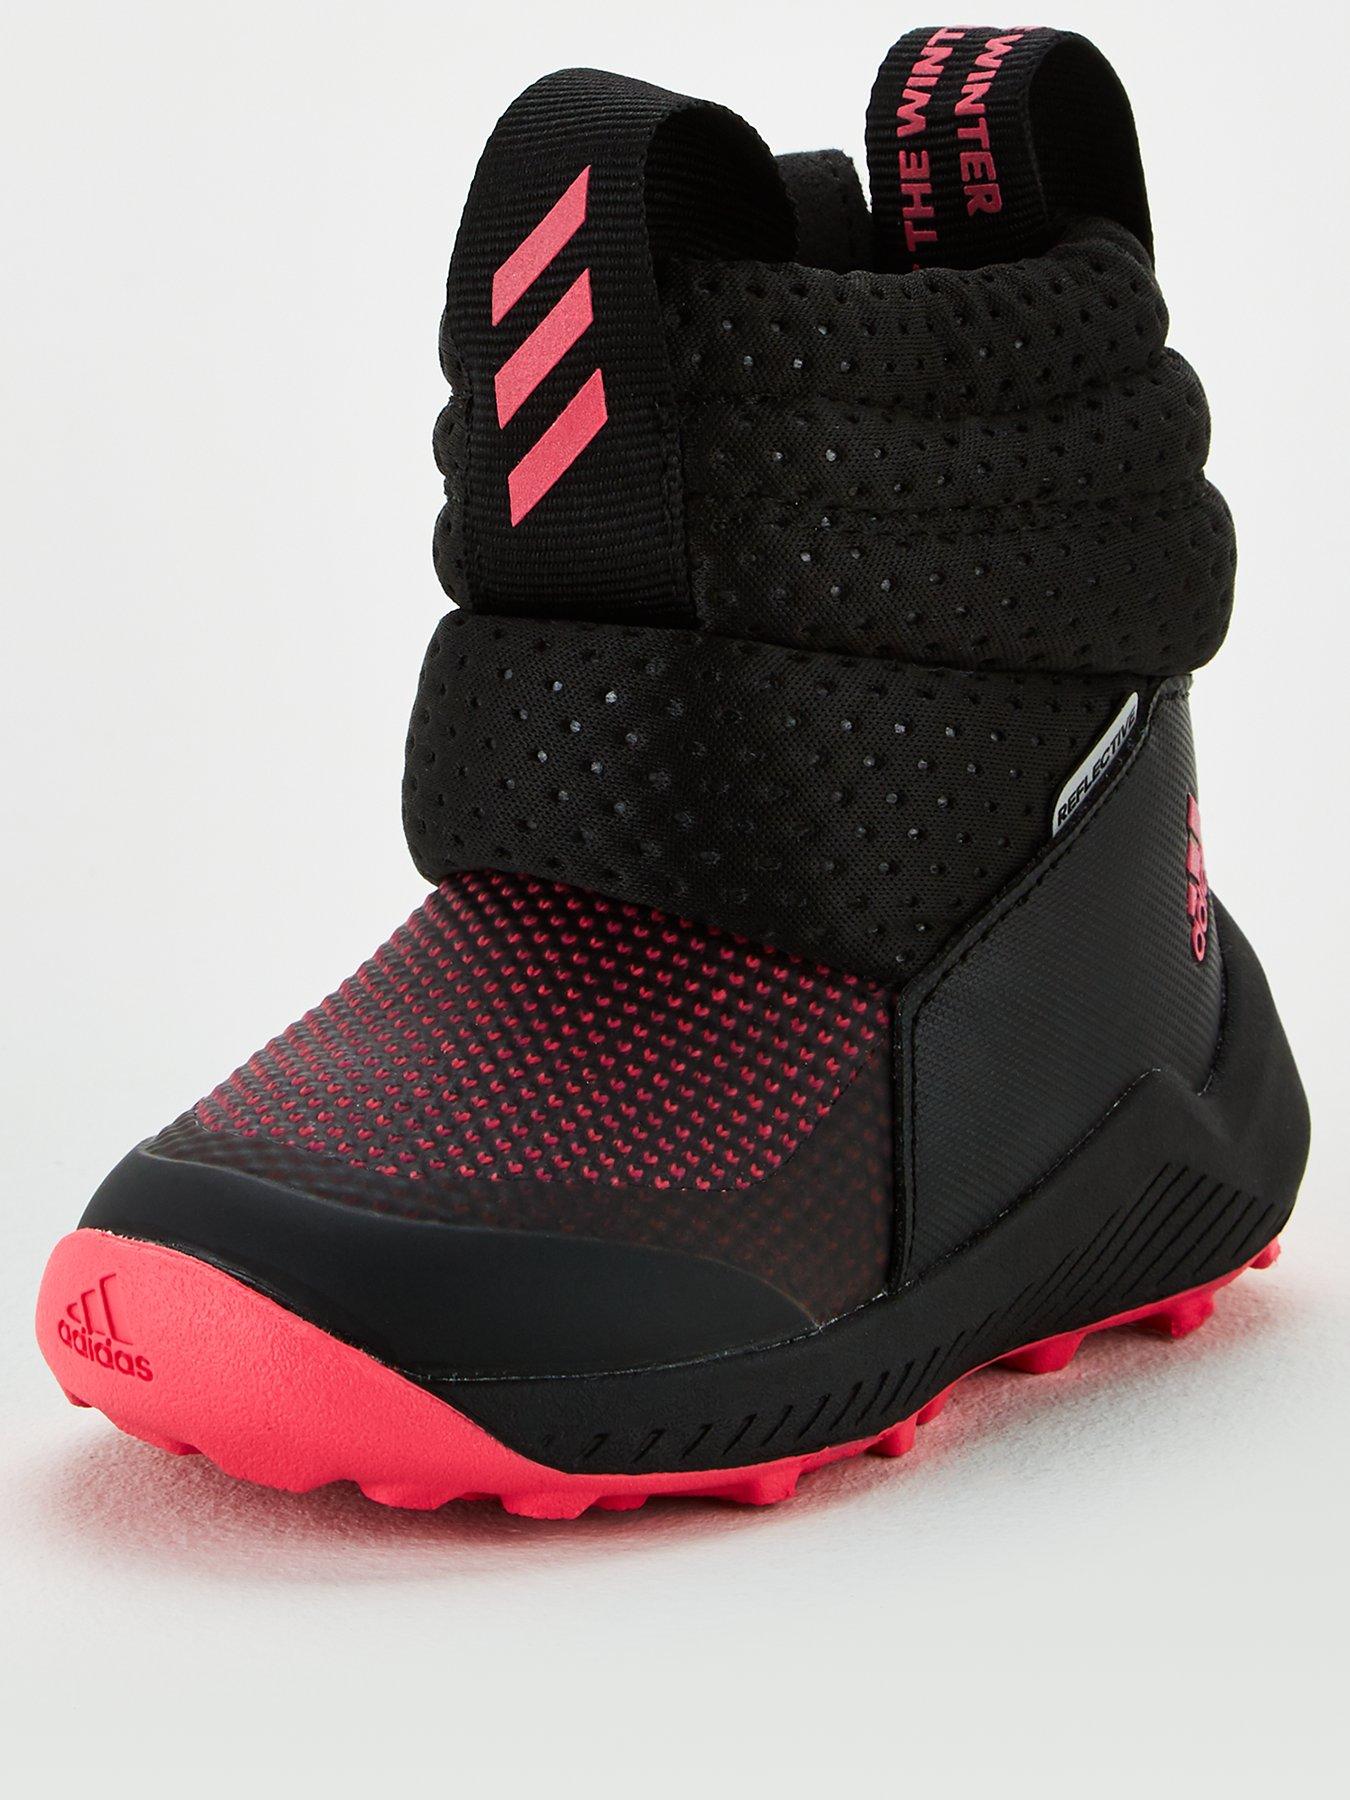 adidas childrens snow boots